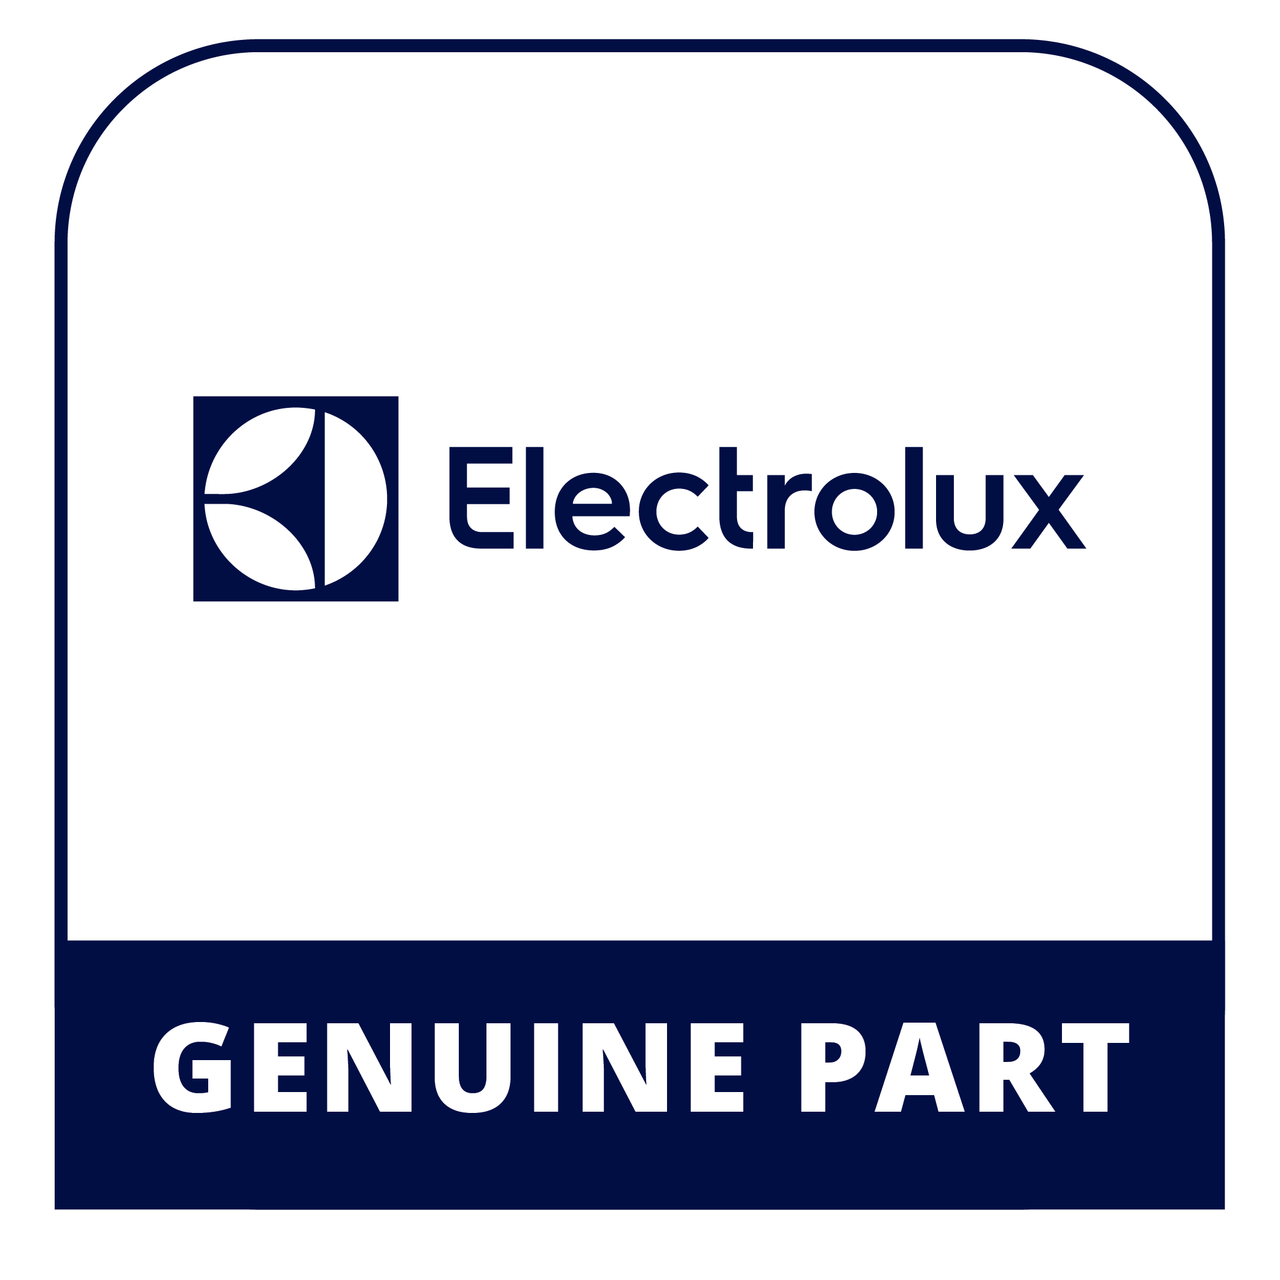 Frigidaire - Electrolux 316633002 Overlay - Genuine Electrolux Part